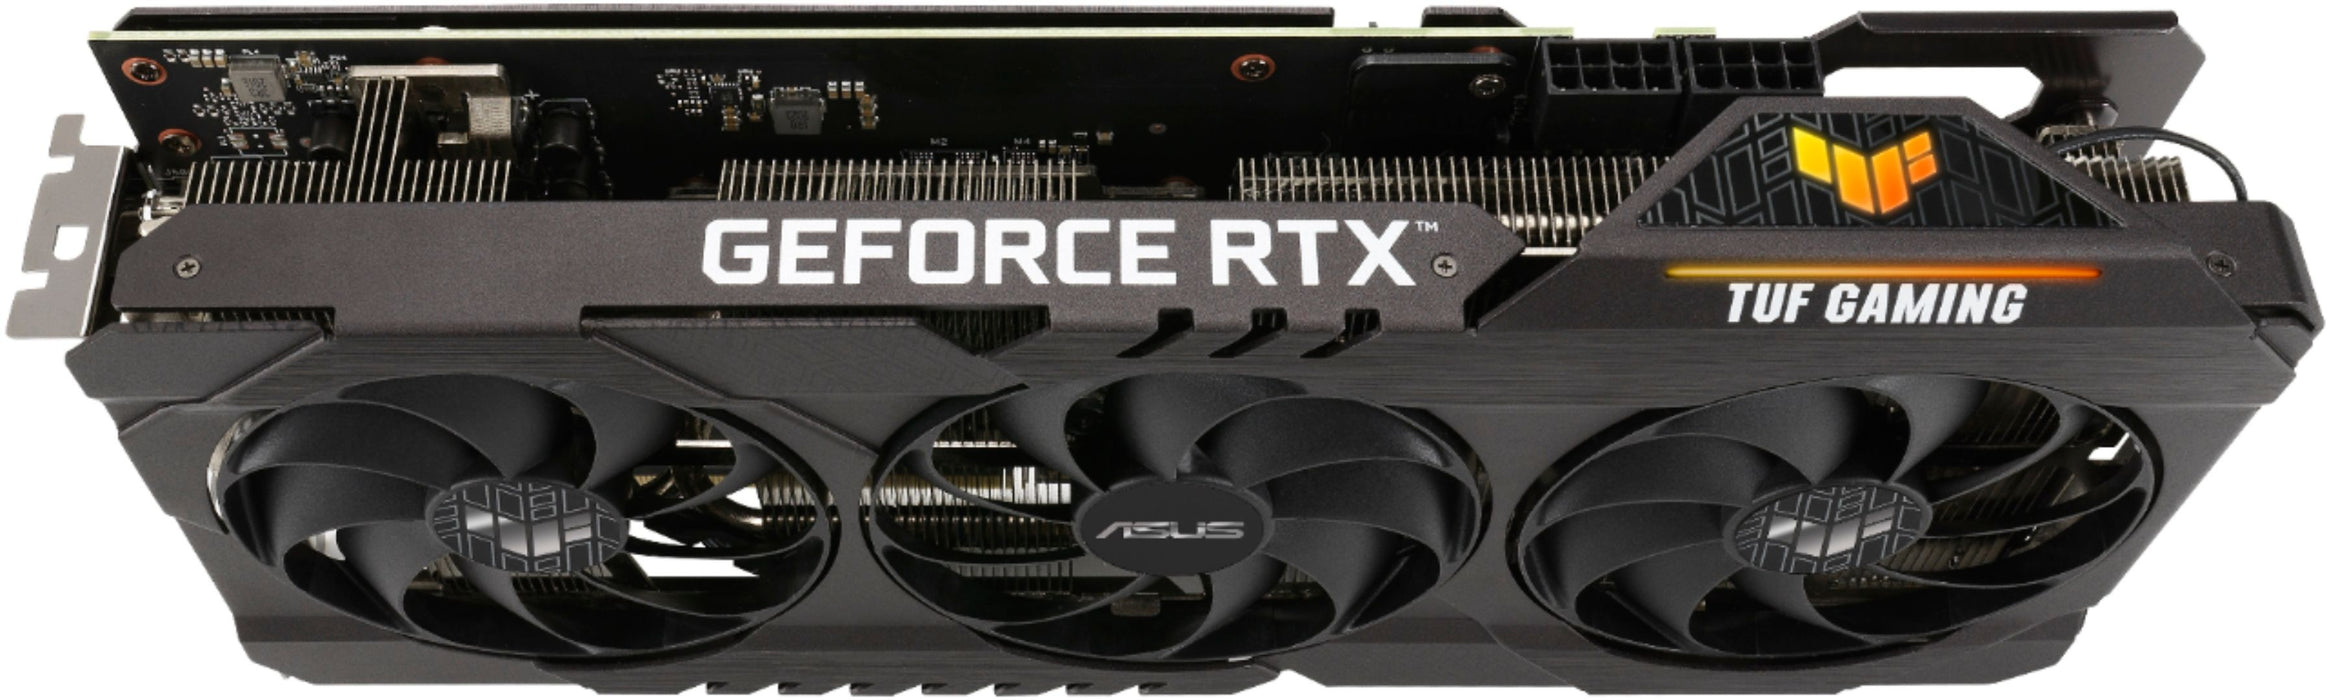 ASUS TUF Gaming GeForce RTX 3070 DirectX 12 TUF-RTX3070-O8G-GAMING 8GB Graphics Video Card